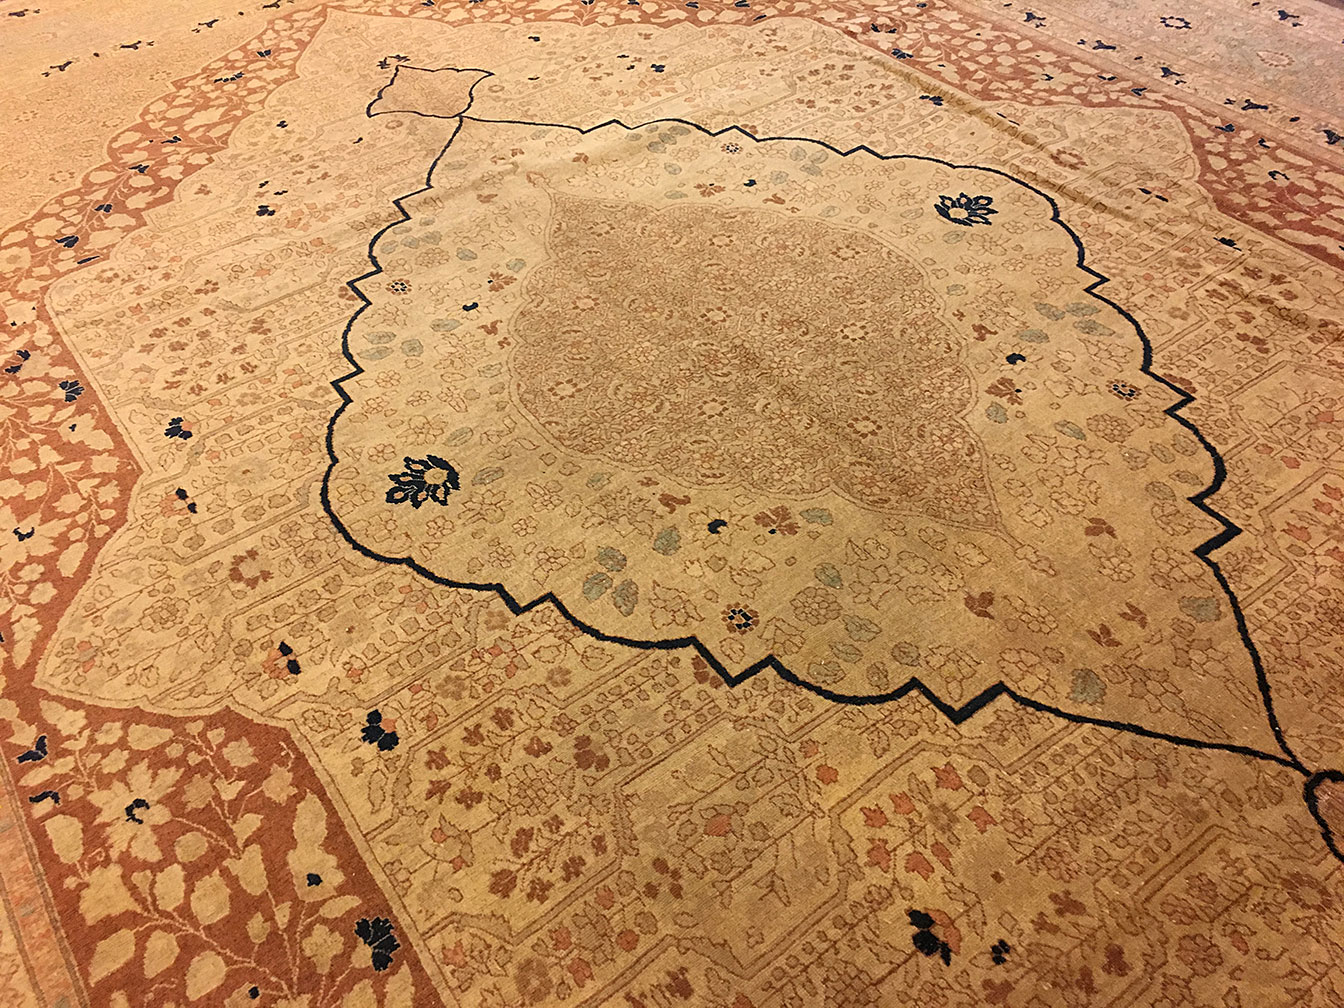 Antique tabriz Carpet - # 52610